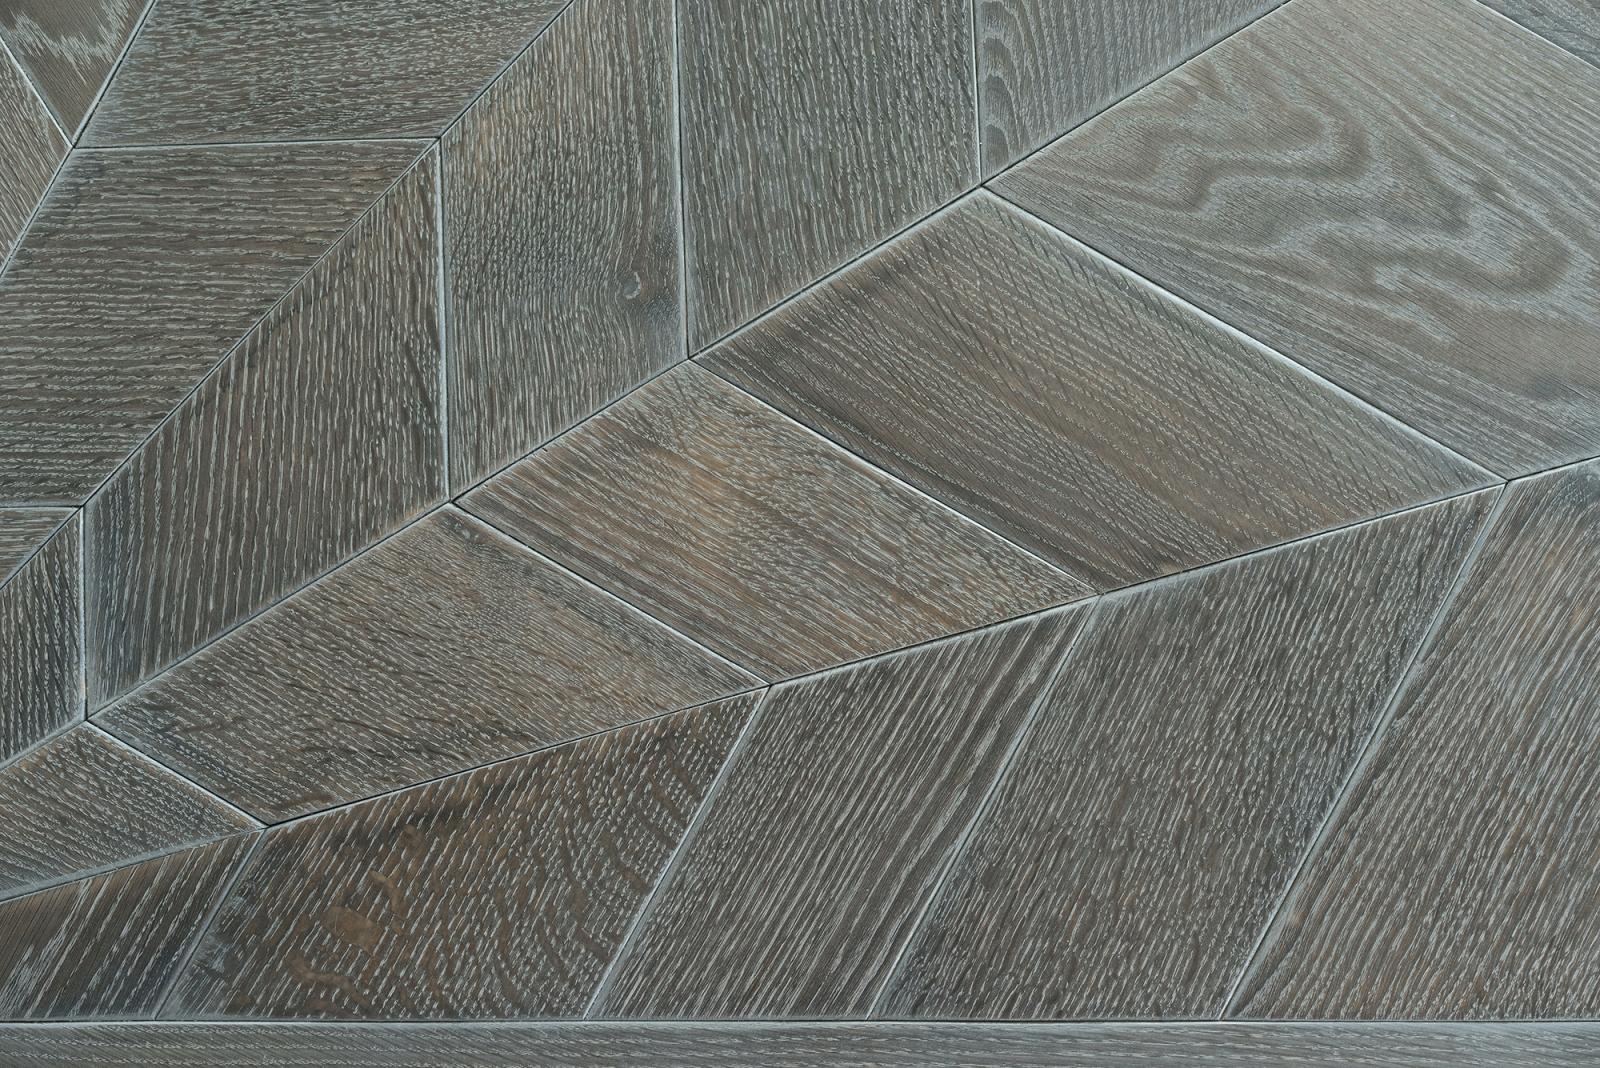 lemma wooden floor grey color